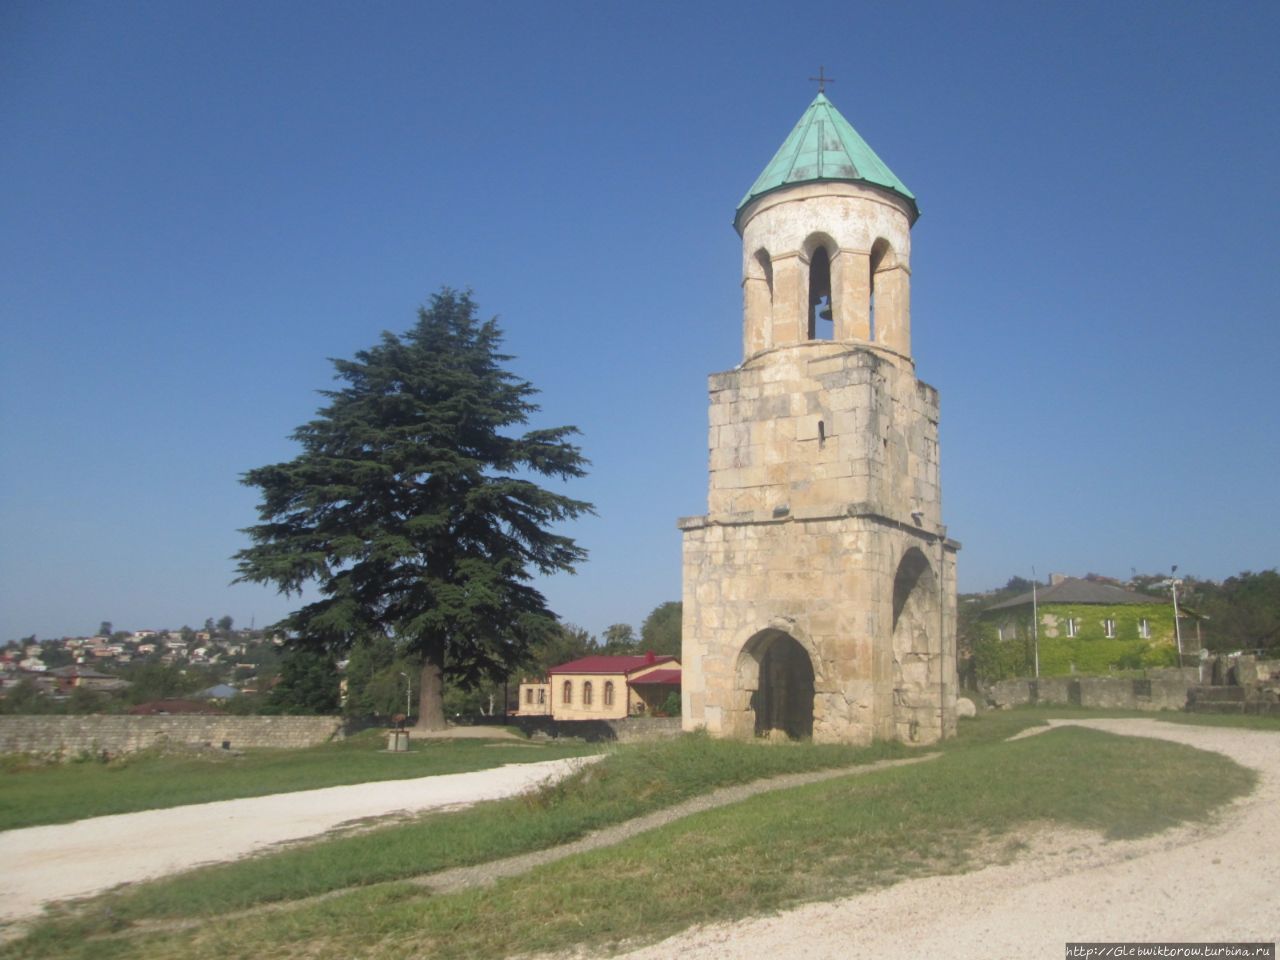 Посещение объекта ЮНЕСКО №710 — Храм Баграта Кутаиси, Грузия